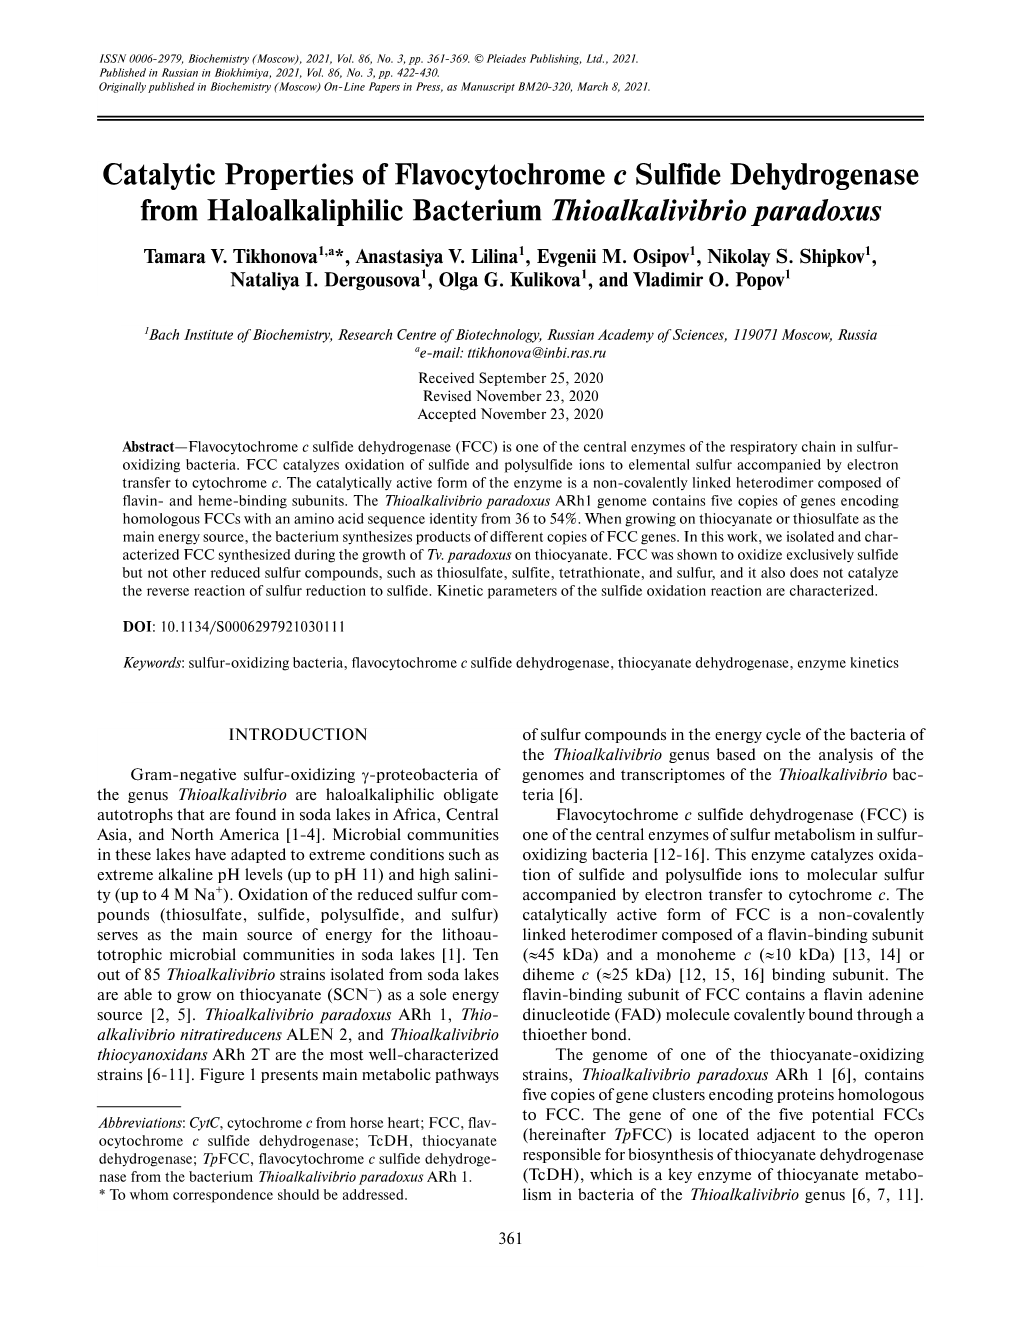 Catalytic Properties of Flavocytochrome C Sulfide Dehydrogenase from Haloalkaliphilic Bacterium Thioalkalivibrio Paradoxus